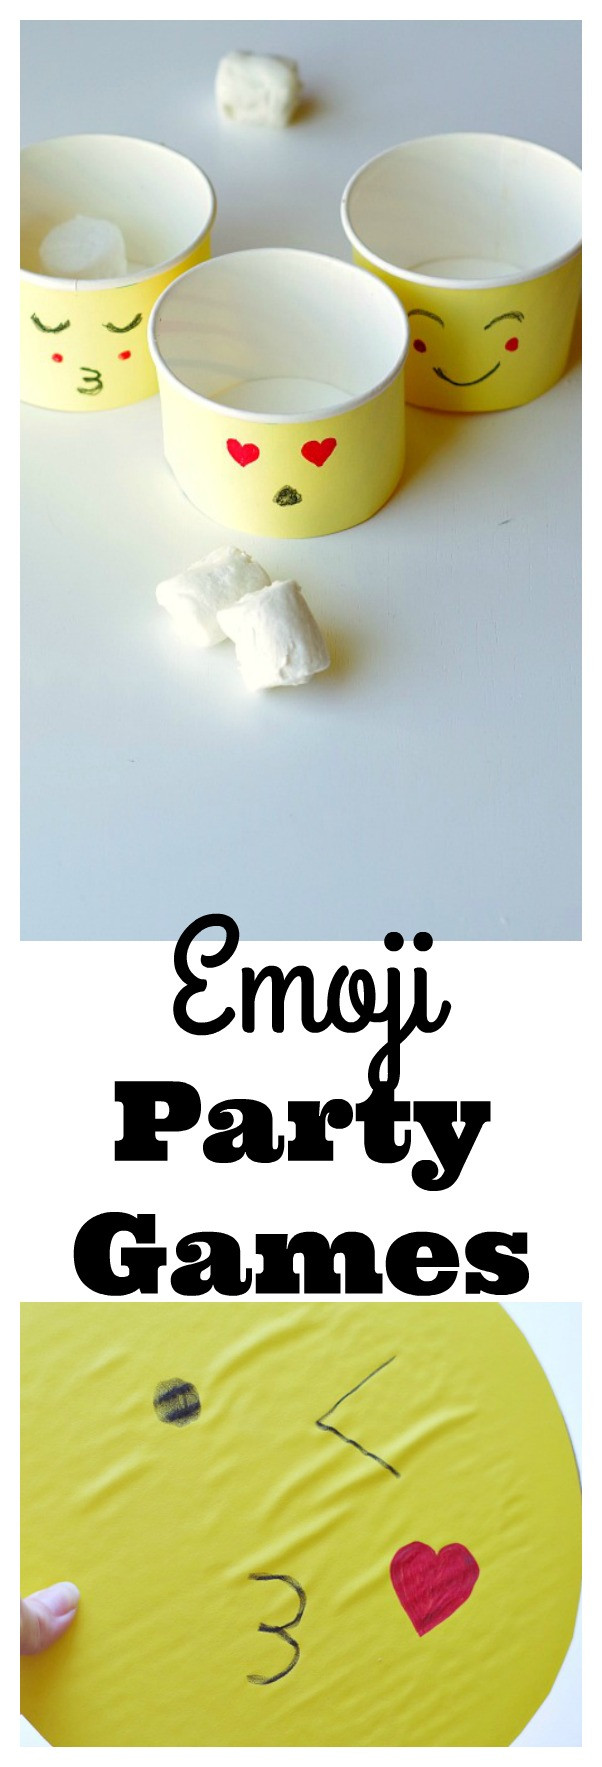 Emoji Party Games Printable